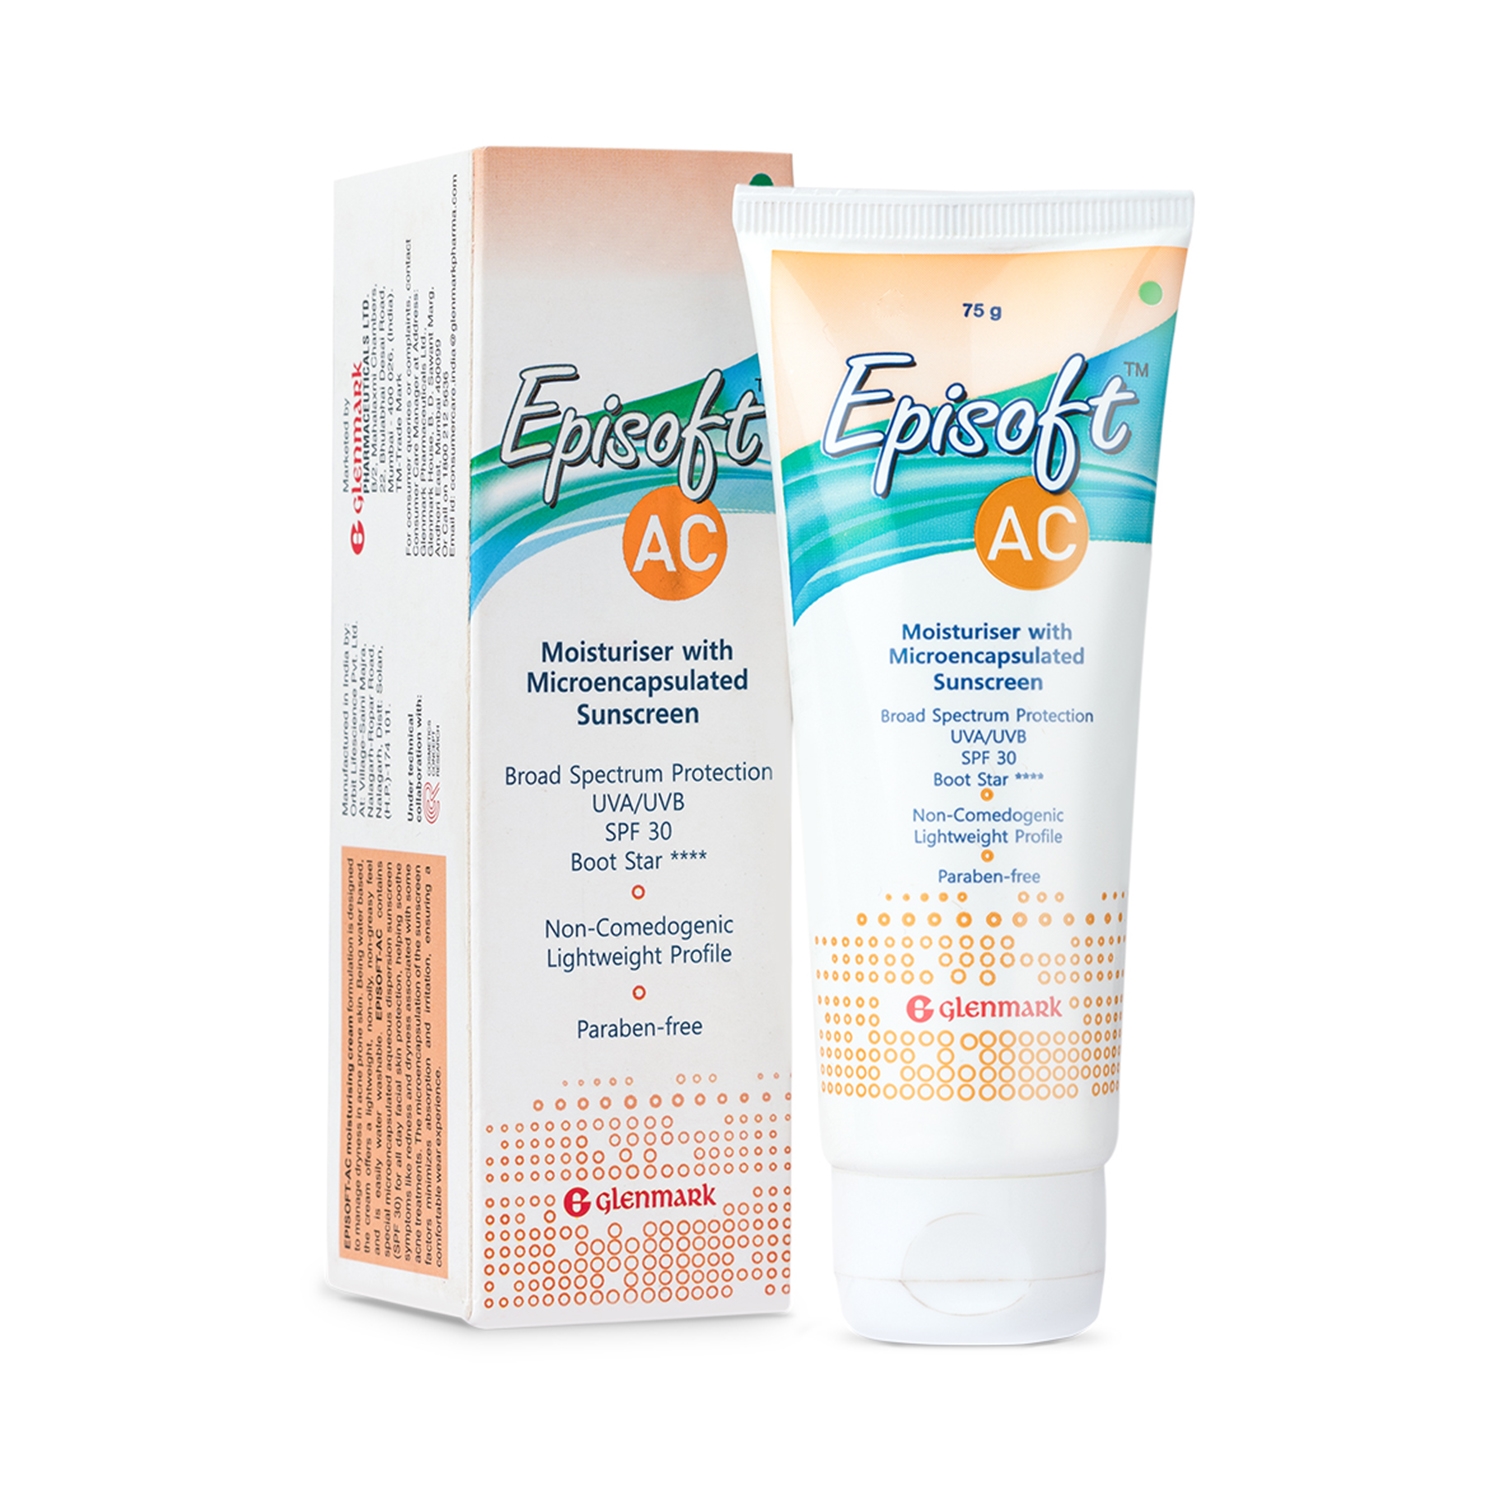 Episoft | Episoft AC Moisturiser SPF 30 With Microencapsulated Sunscreen (75g)